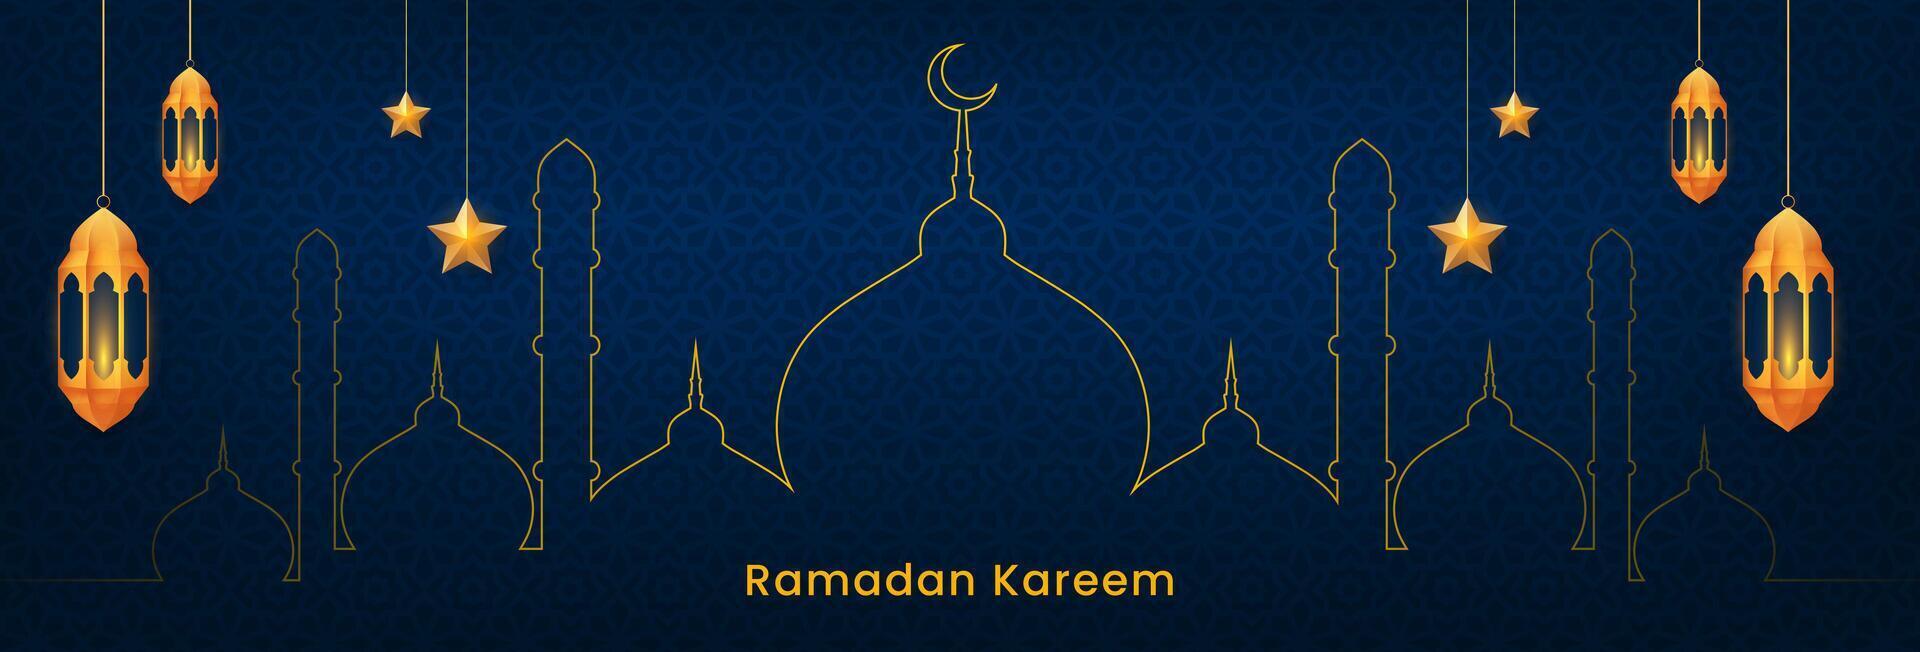 Ramadán kareem bandera diseño. islámico celebracion antecedentes con dorado linternas, estrella adornos vector ilustración